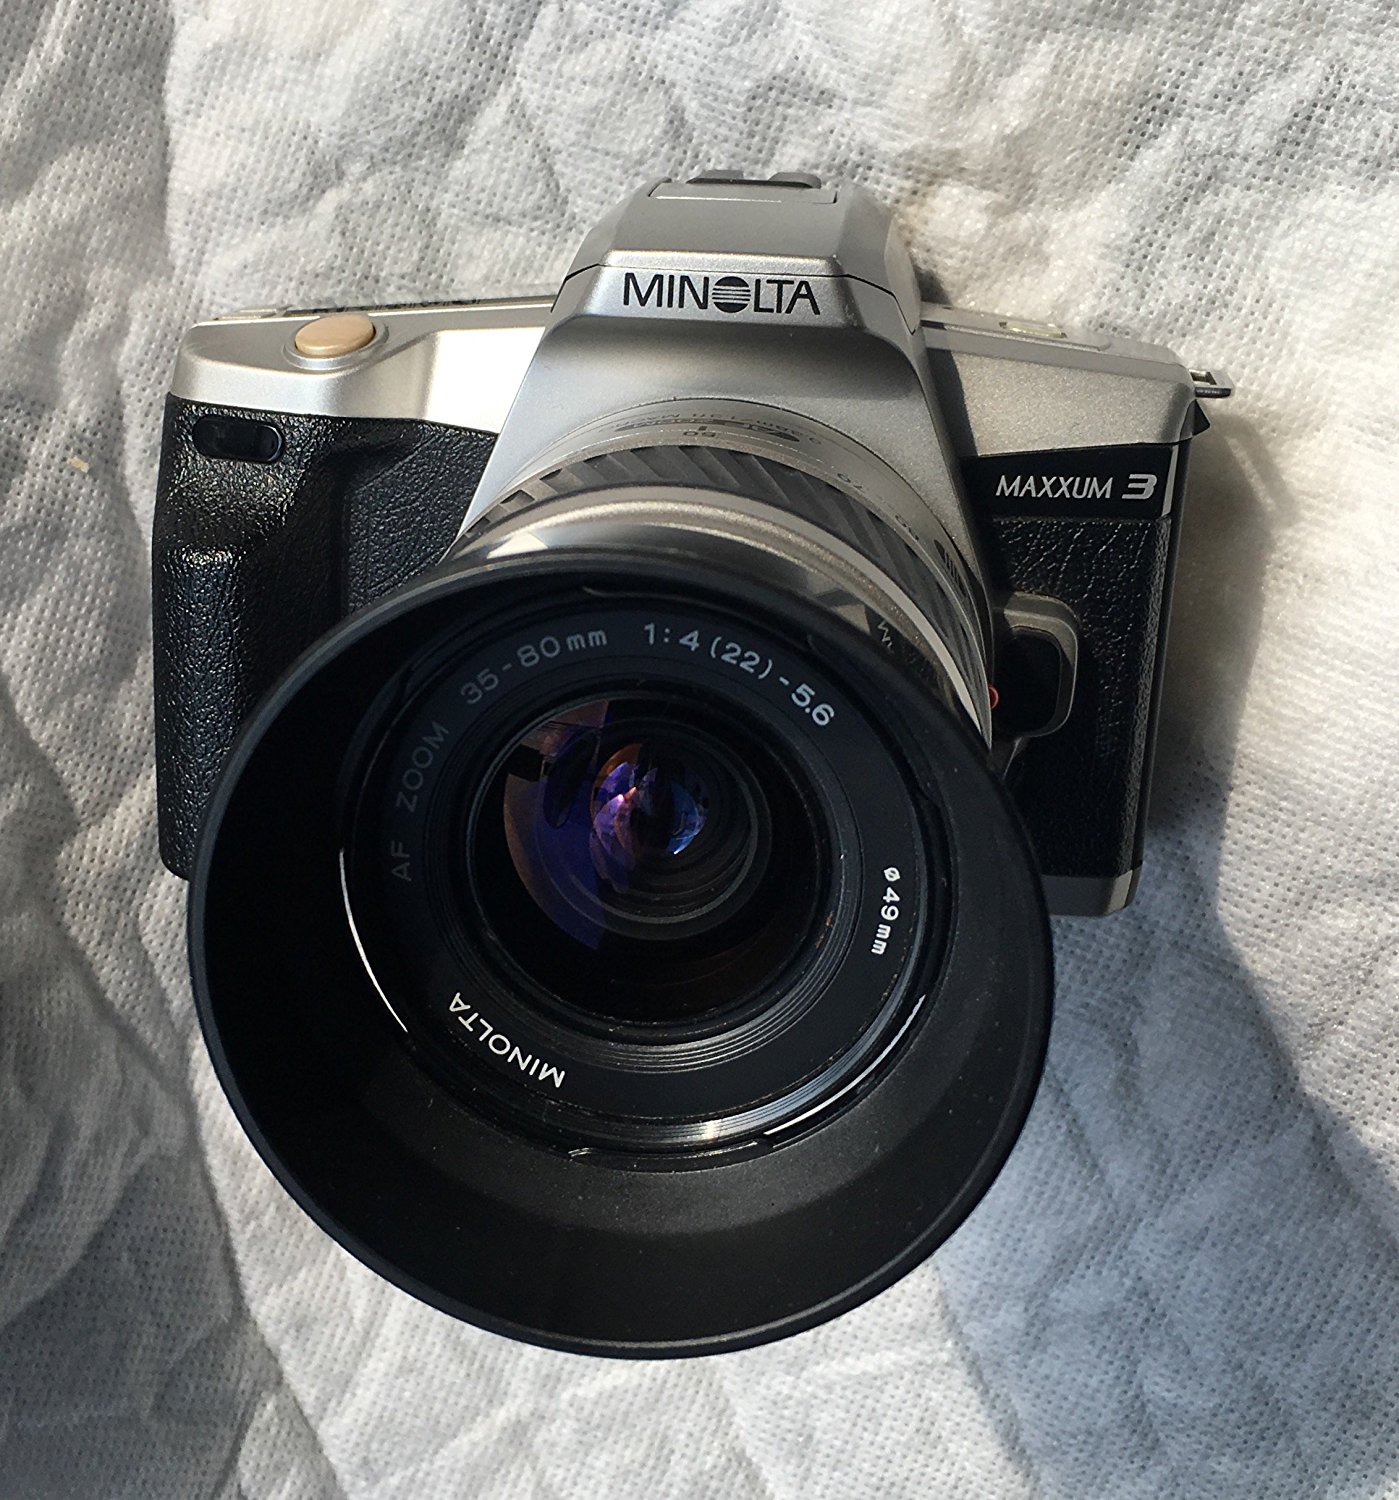 Amazon.com : Minolta Maxxum 3 Date SLR Camera with 35-80 II Lens ...